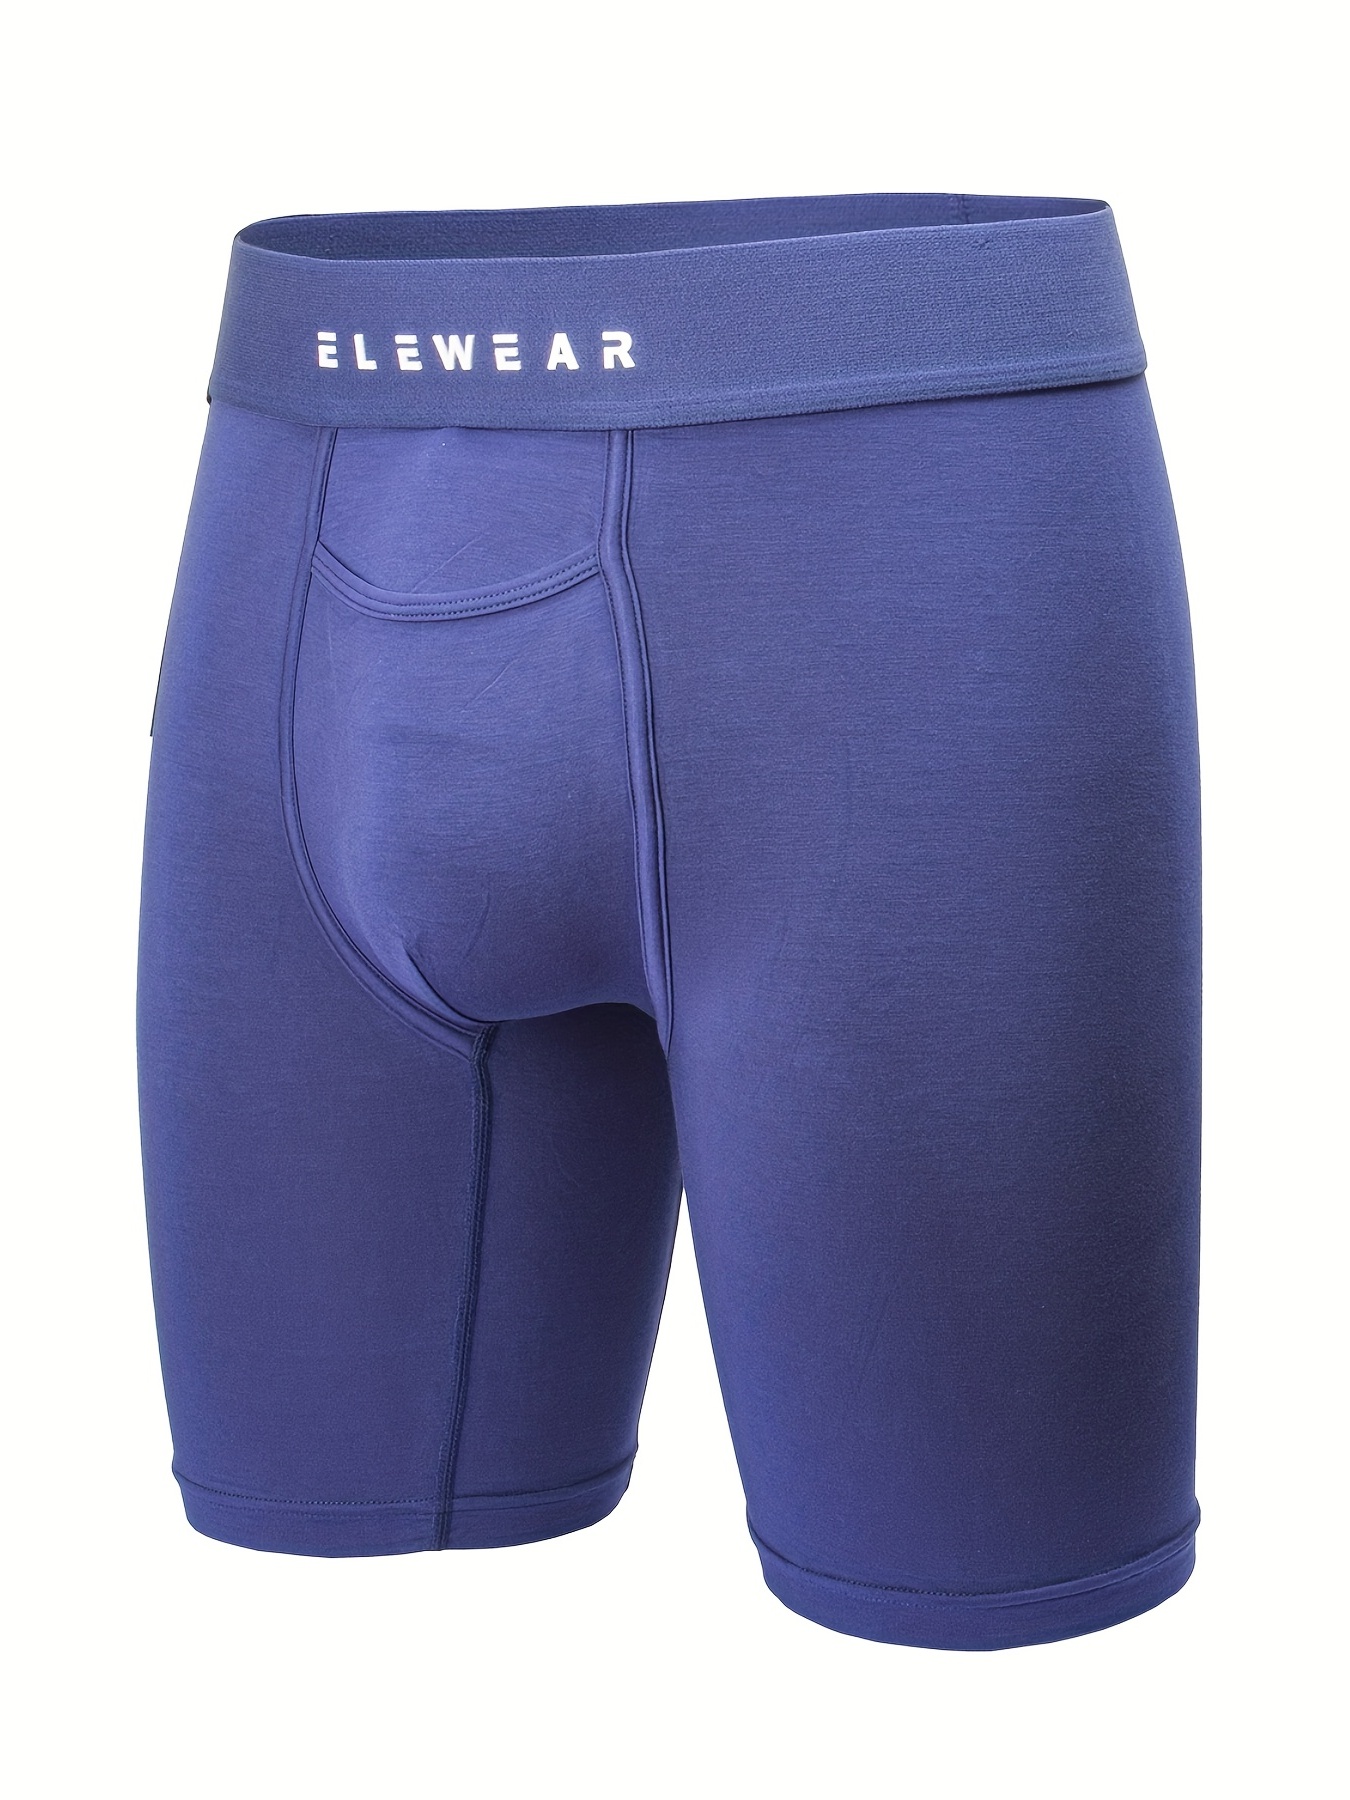 Pair of Thieves Men's Long Boxer Shorts Black Purple Sz Medium Underwear  Cotton